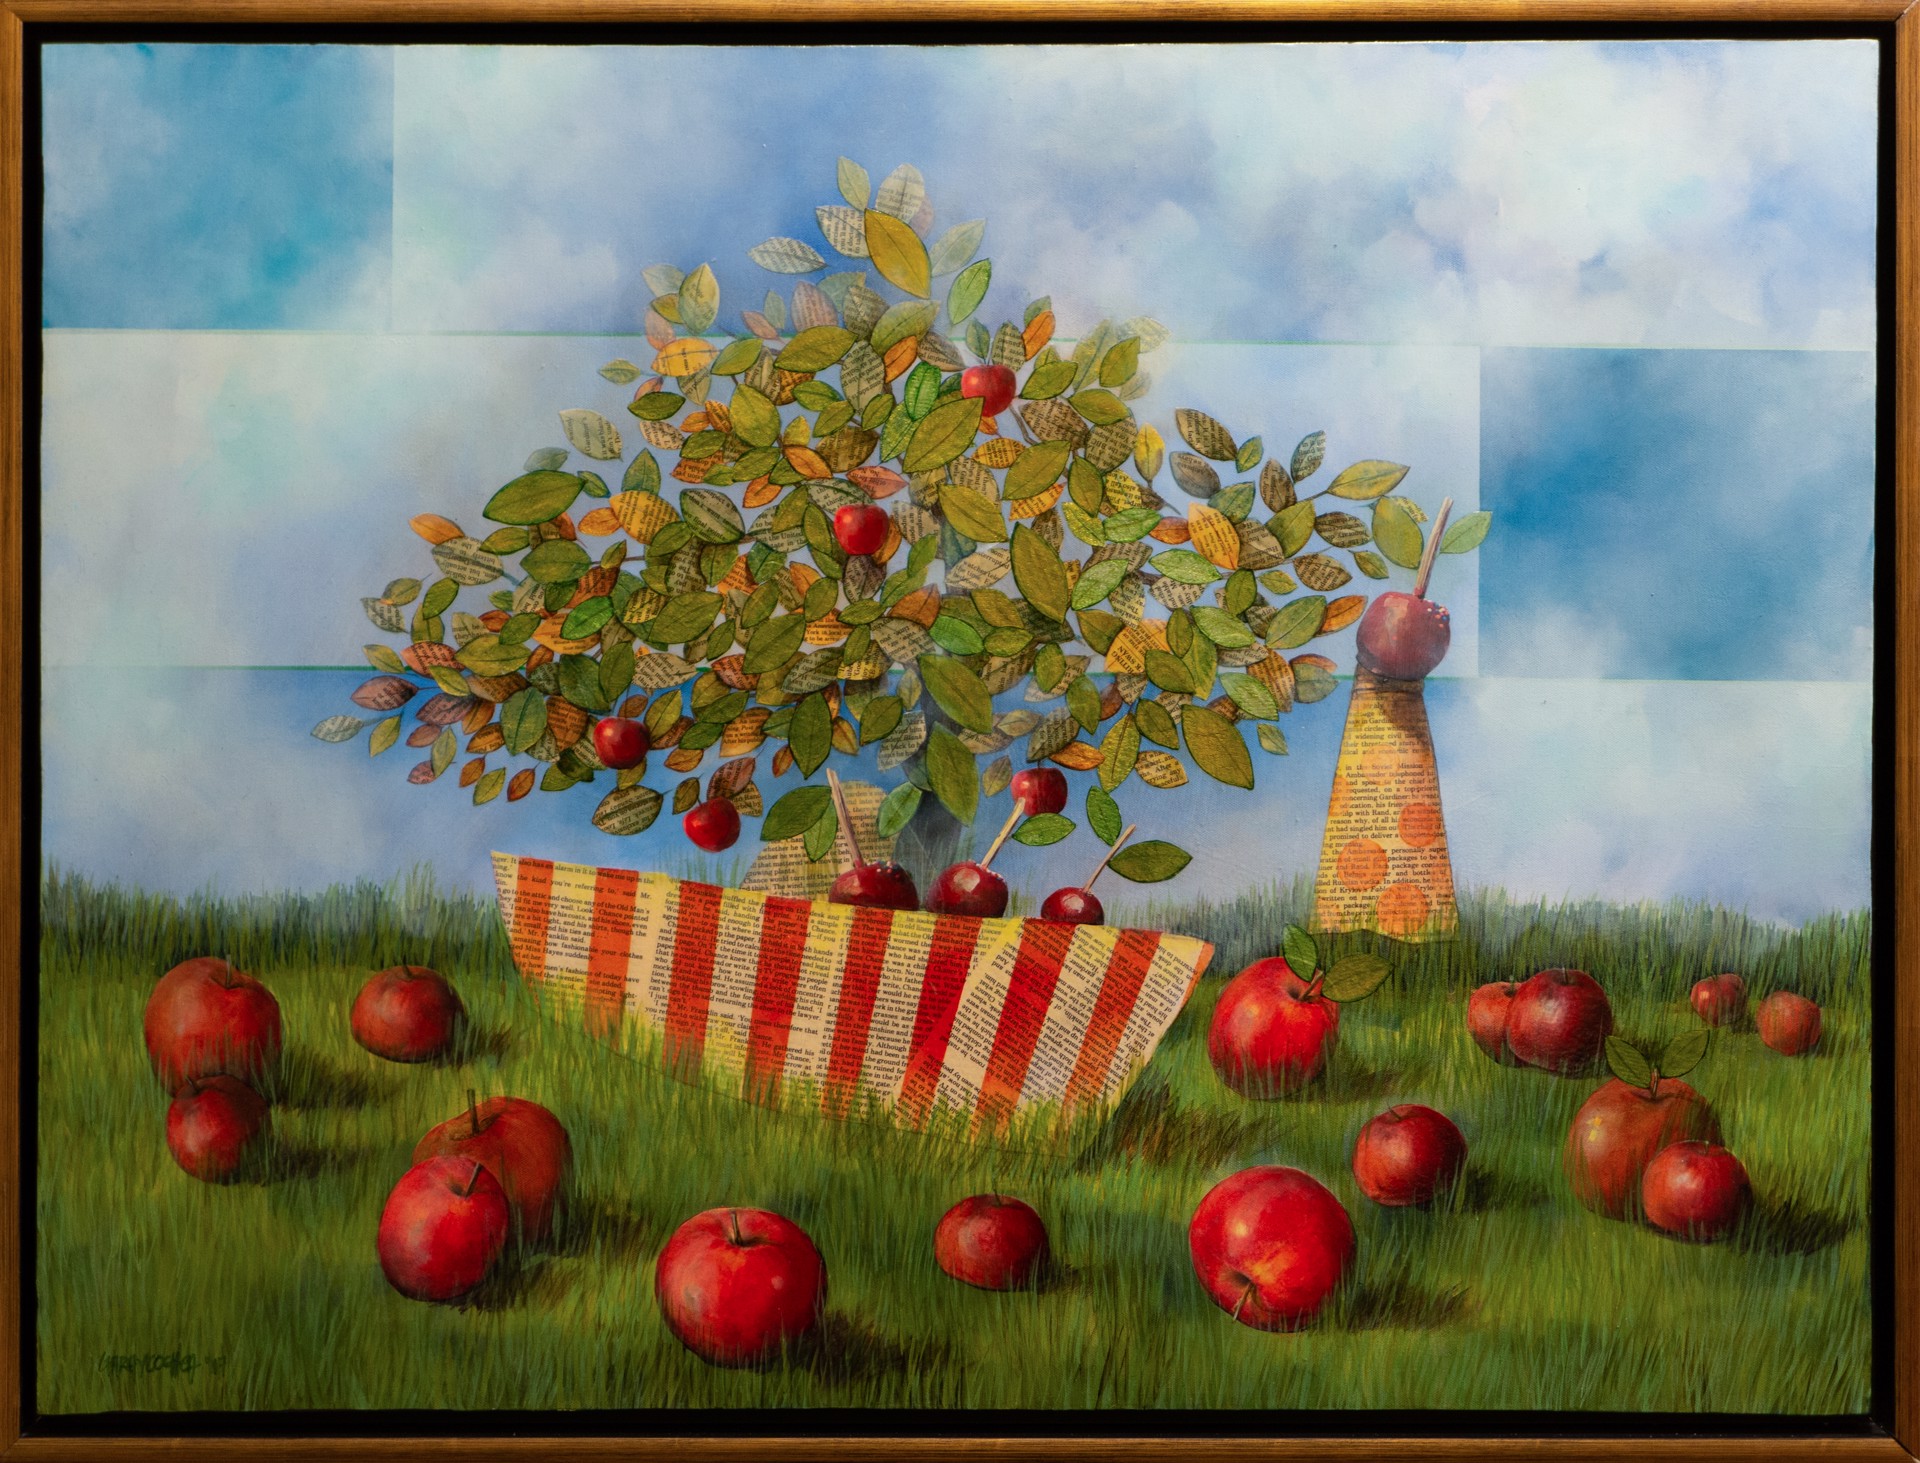 Candy Apples Field by Guido Garaycochea